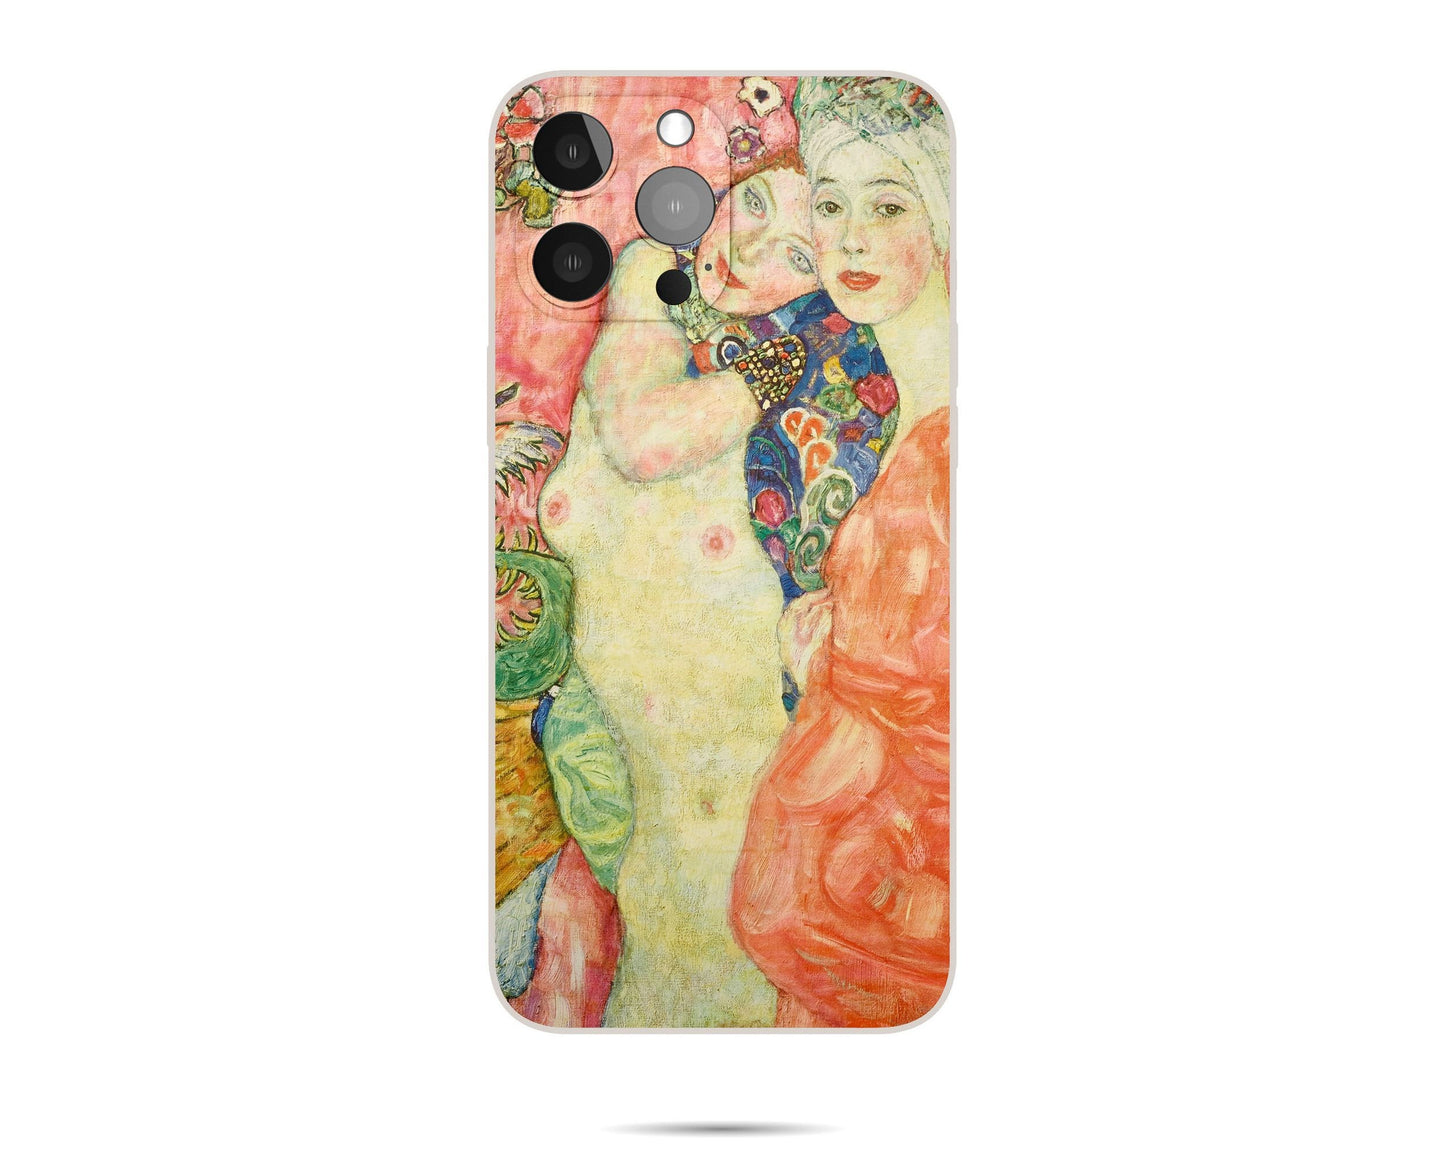 Iphone Case Of Gustav Klimt Painting The Friends Iphone Cover, Iphone 11 Case, Designer Iphone Case, Protective Case, Iphone Case Silicone